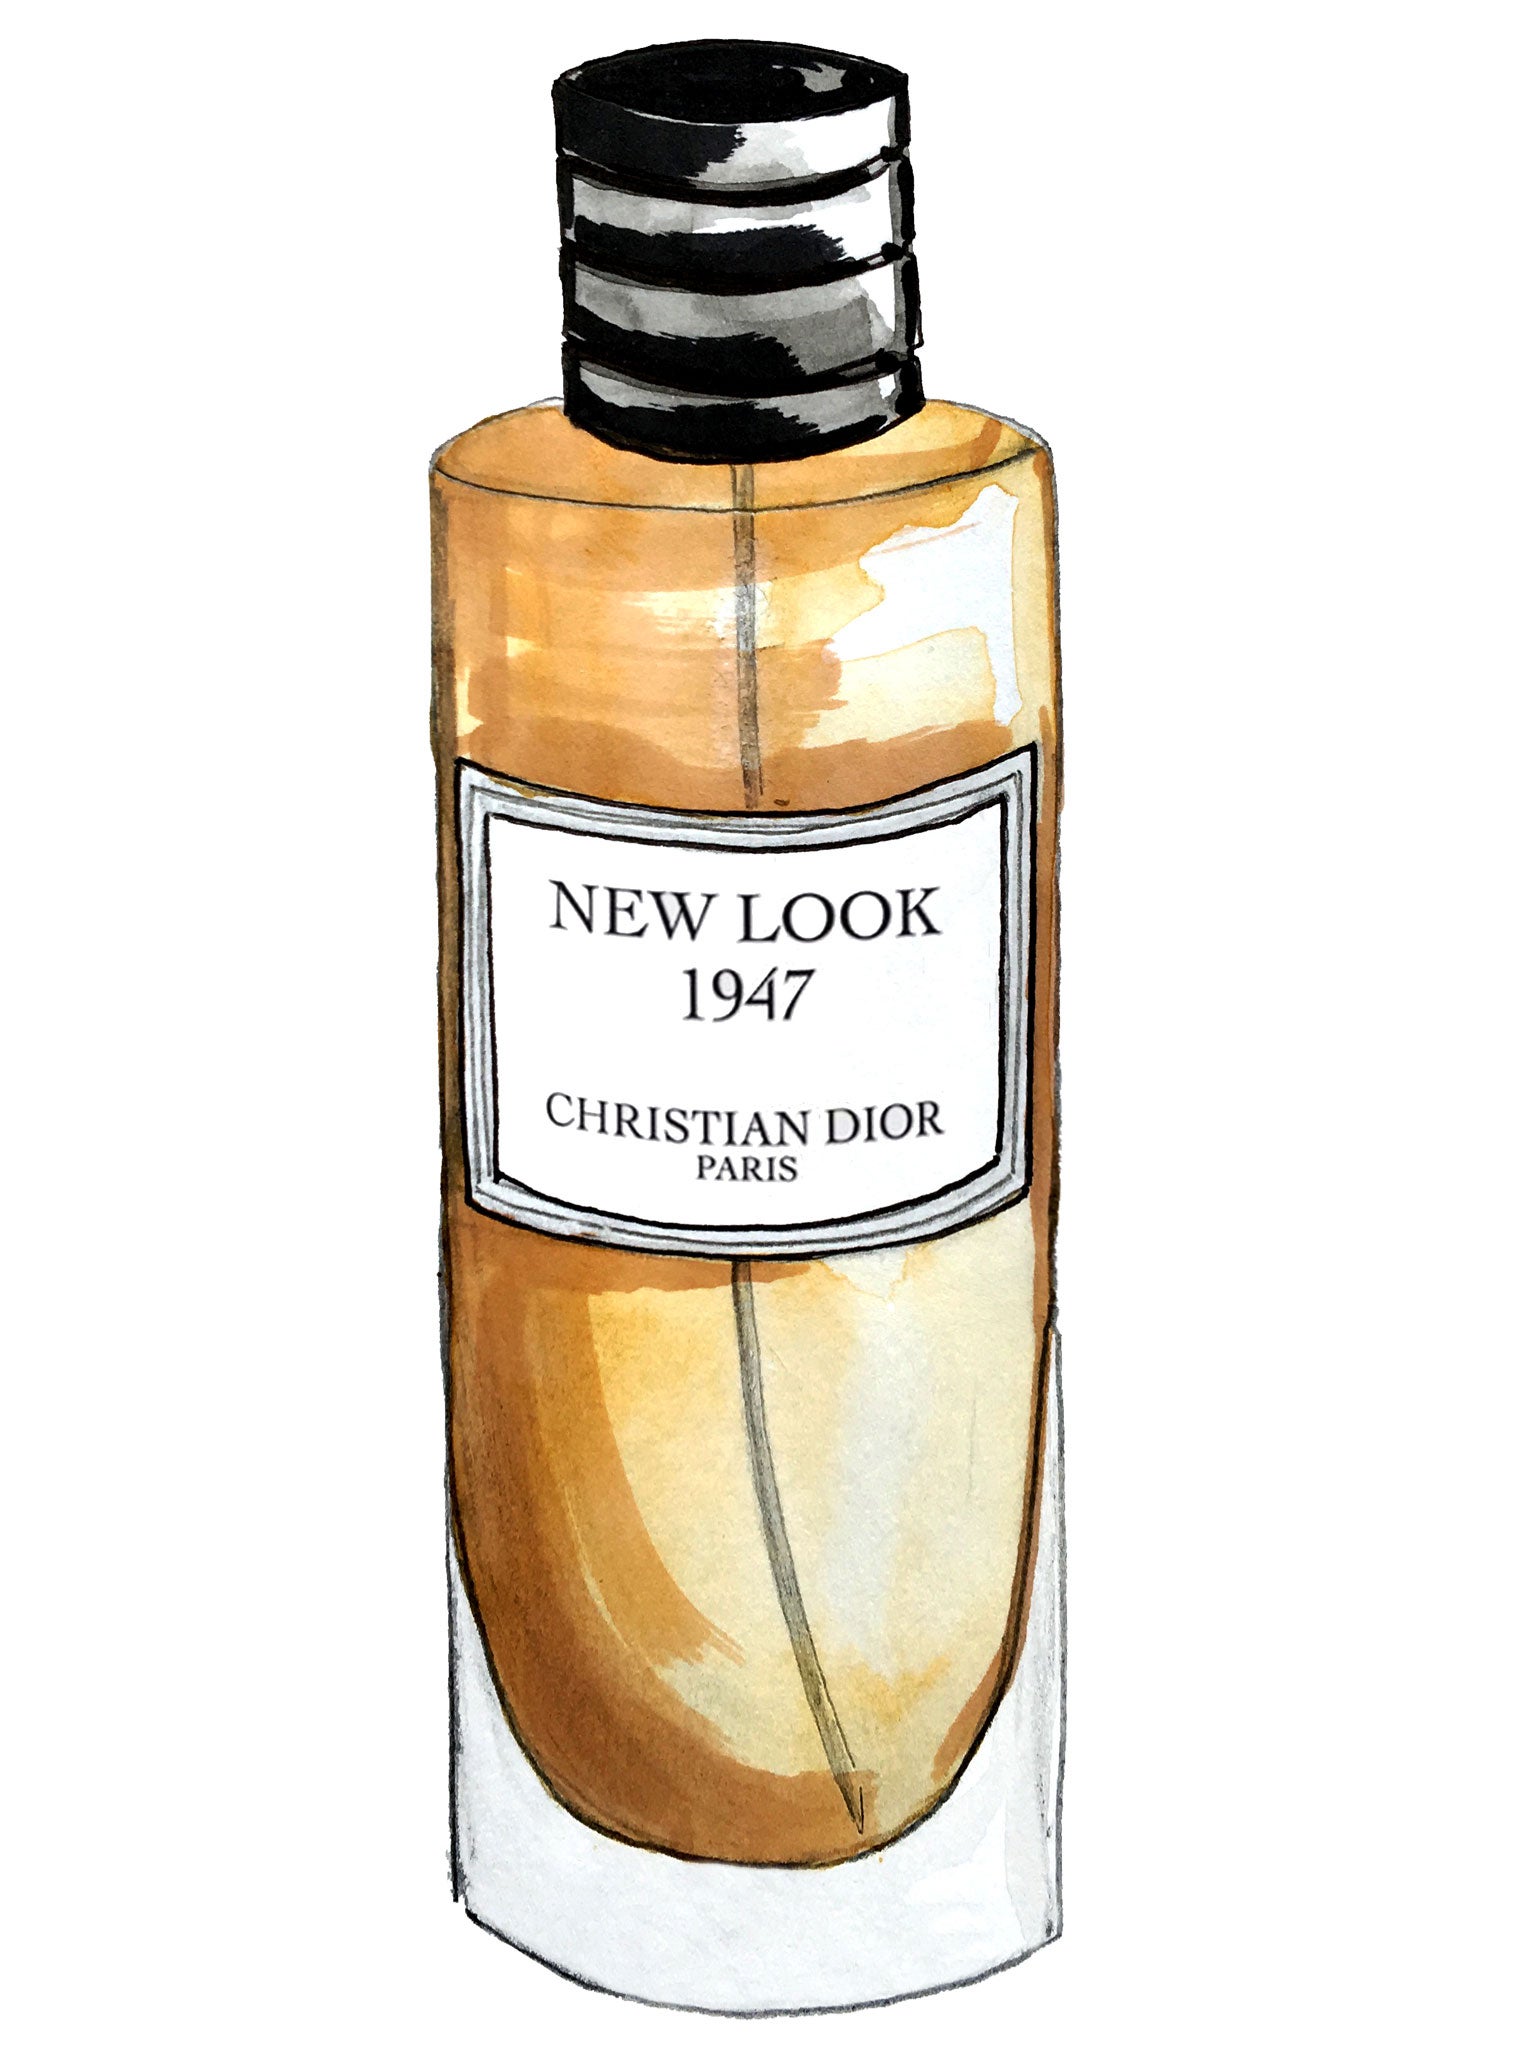 &#13;
Dior’s Collection Privée line contains a dozen scents, designed to be unisex &#13;